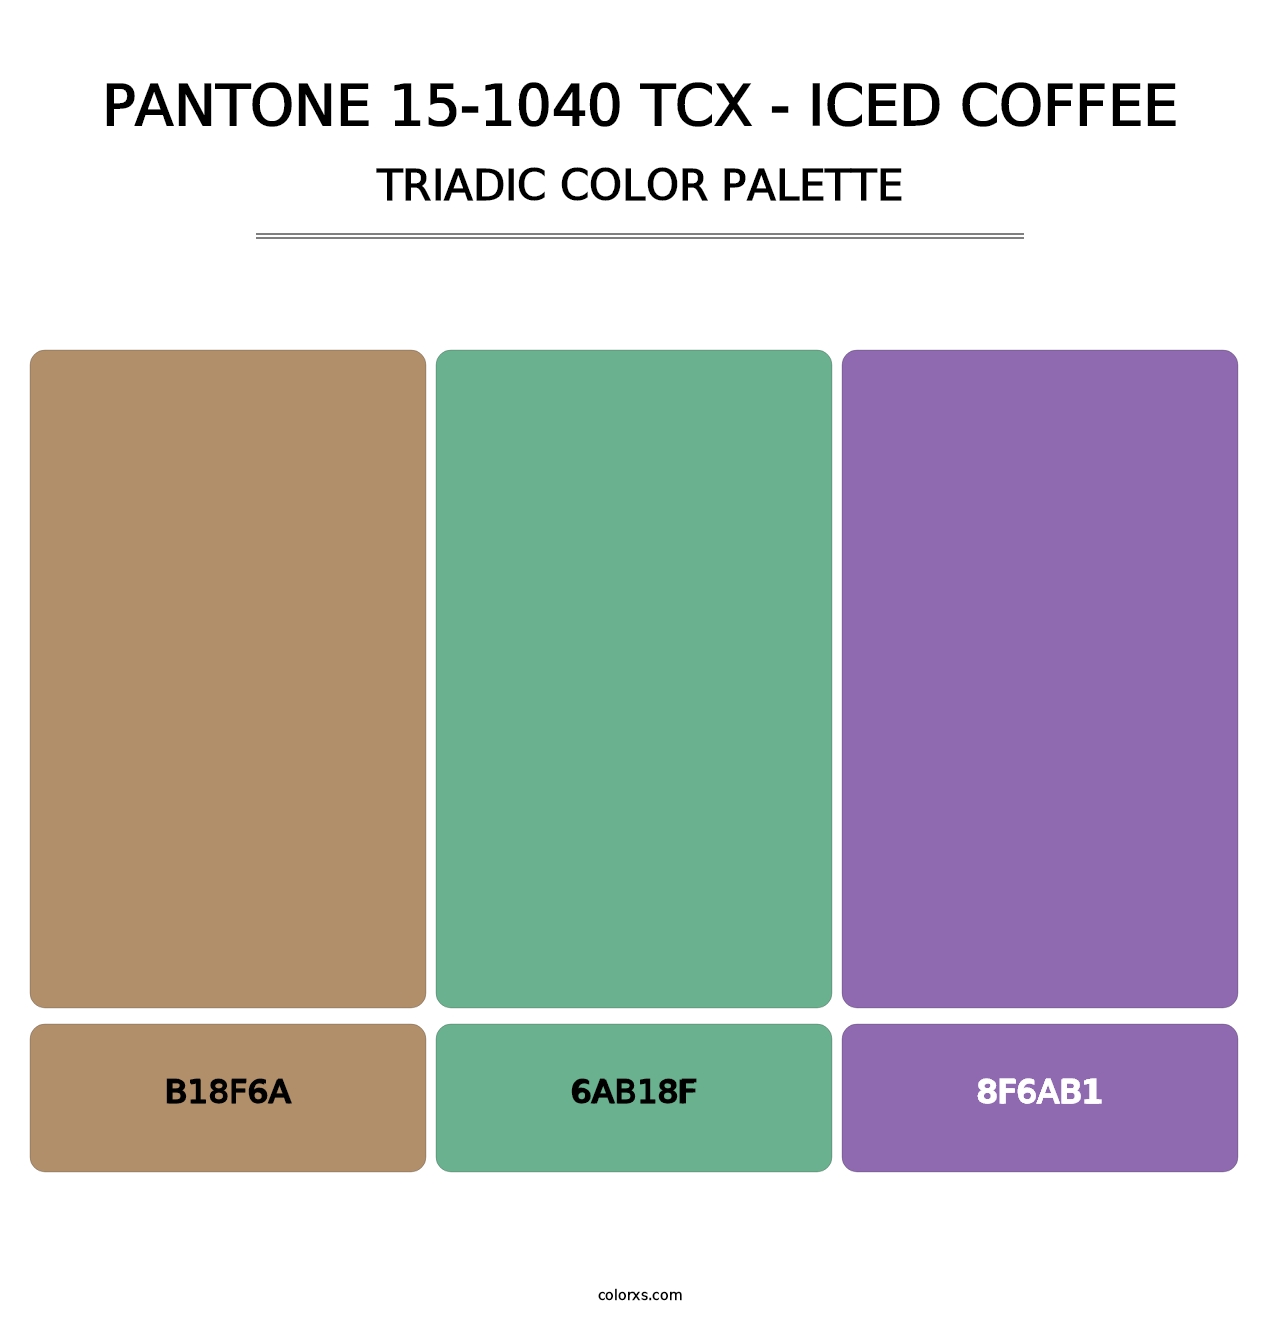 PANTONE 15-1040 TCX - Iced Coffee - Triadic Color Palette